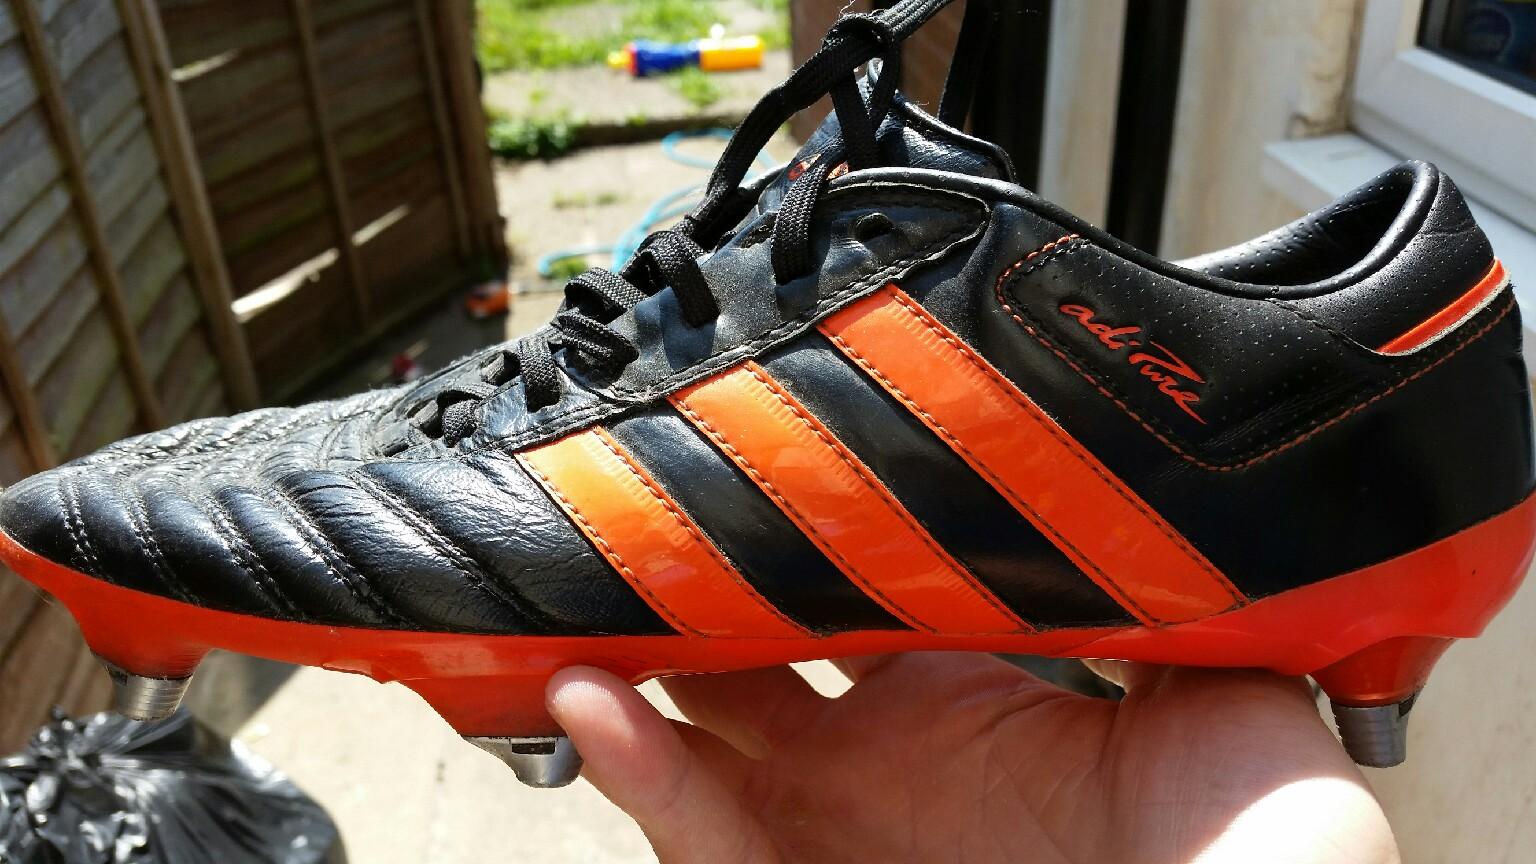 adidas football boots size 8